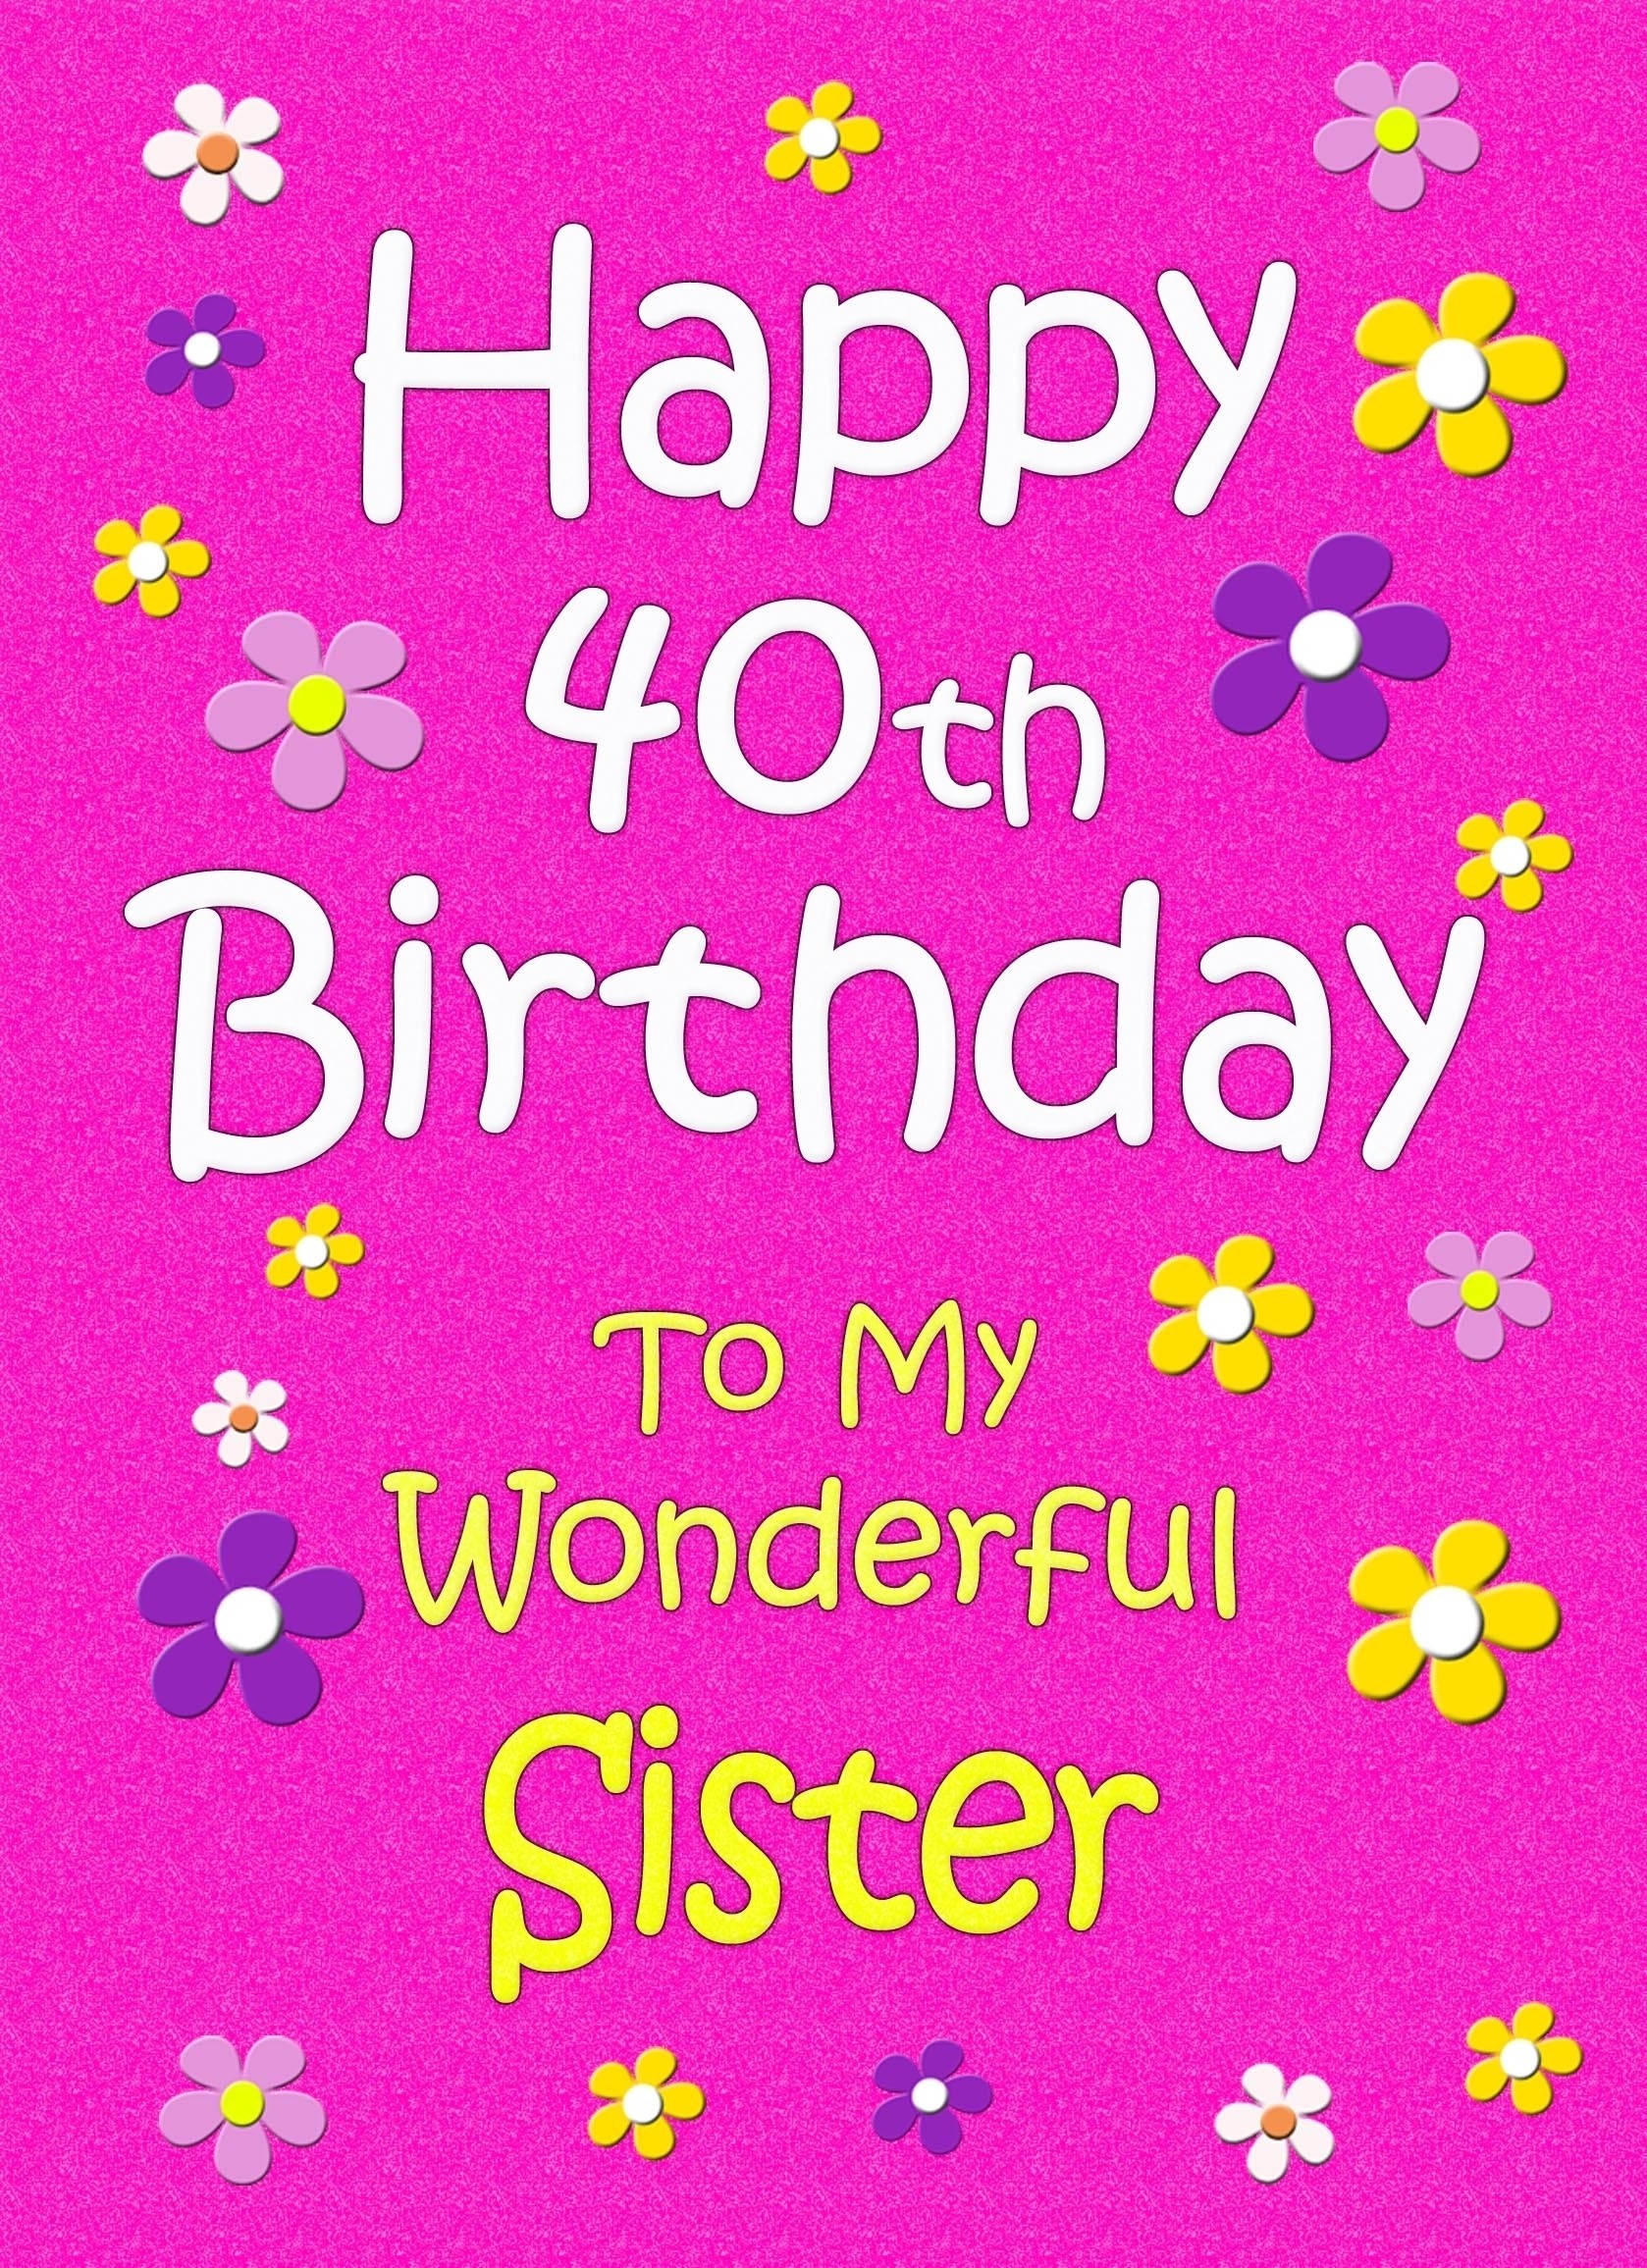 Sister 40th Birthday Card (Pink)